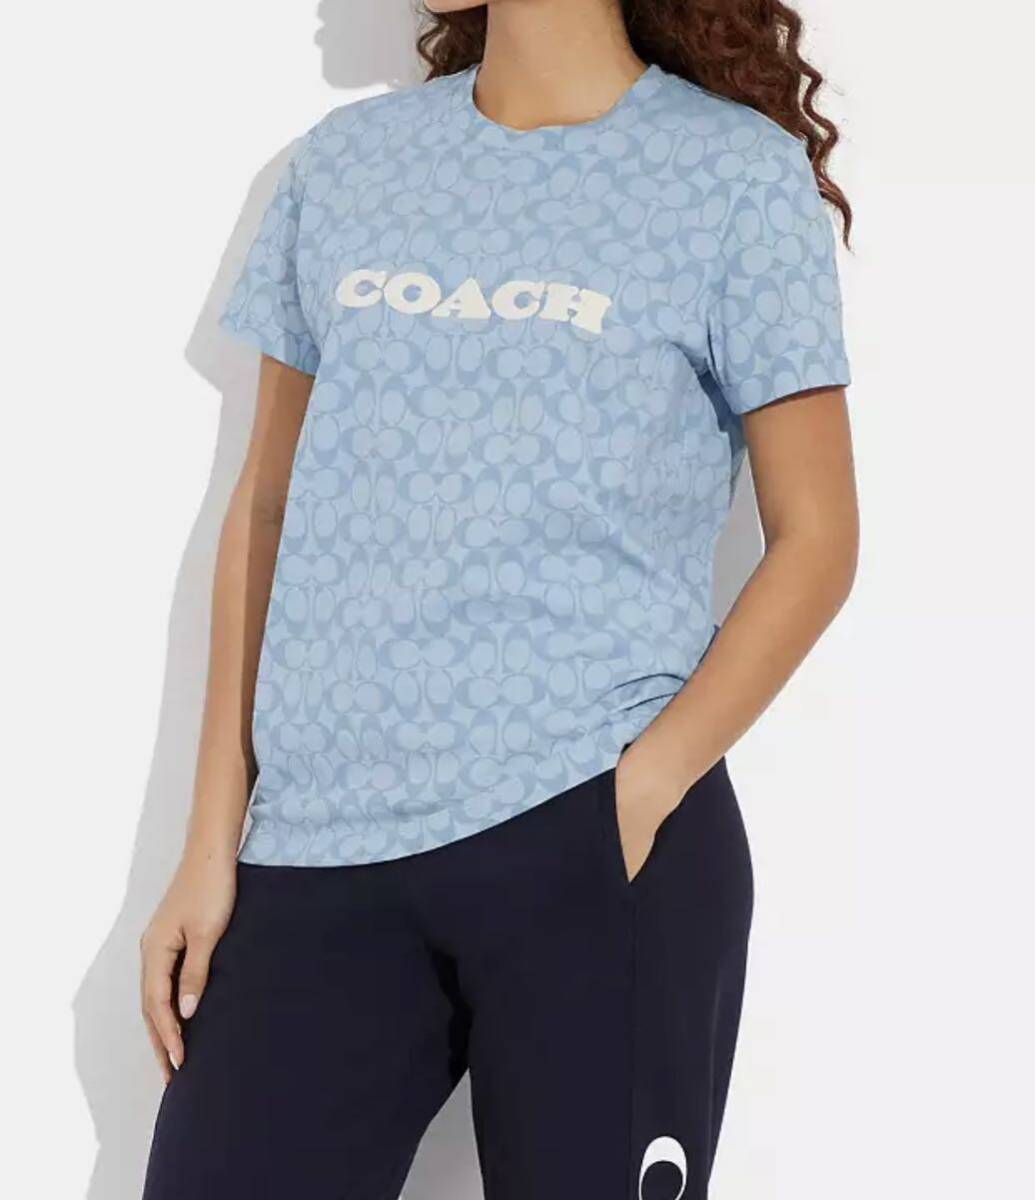  new goods COACH signature car n blur - T-shirt S blue multi cotton 100%